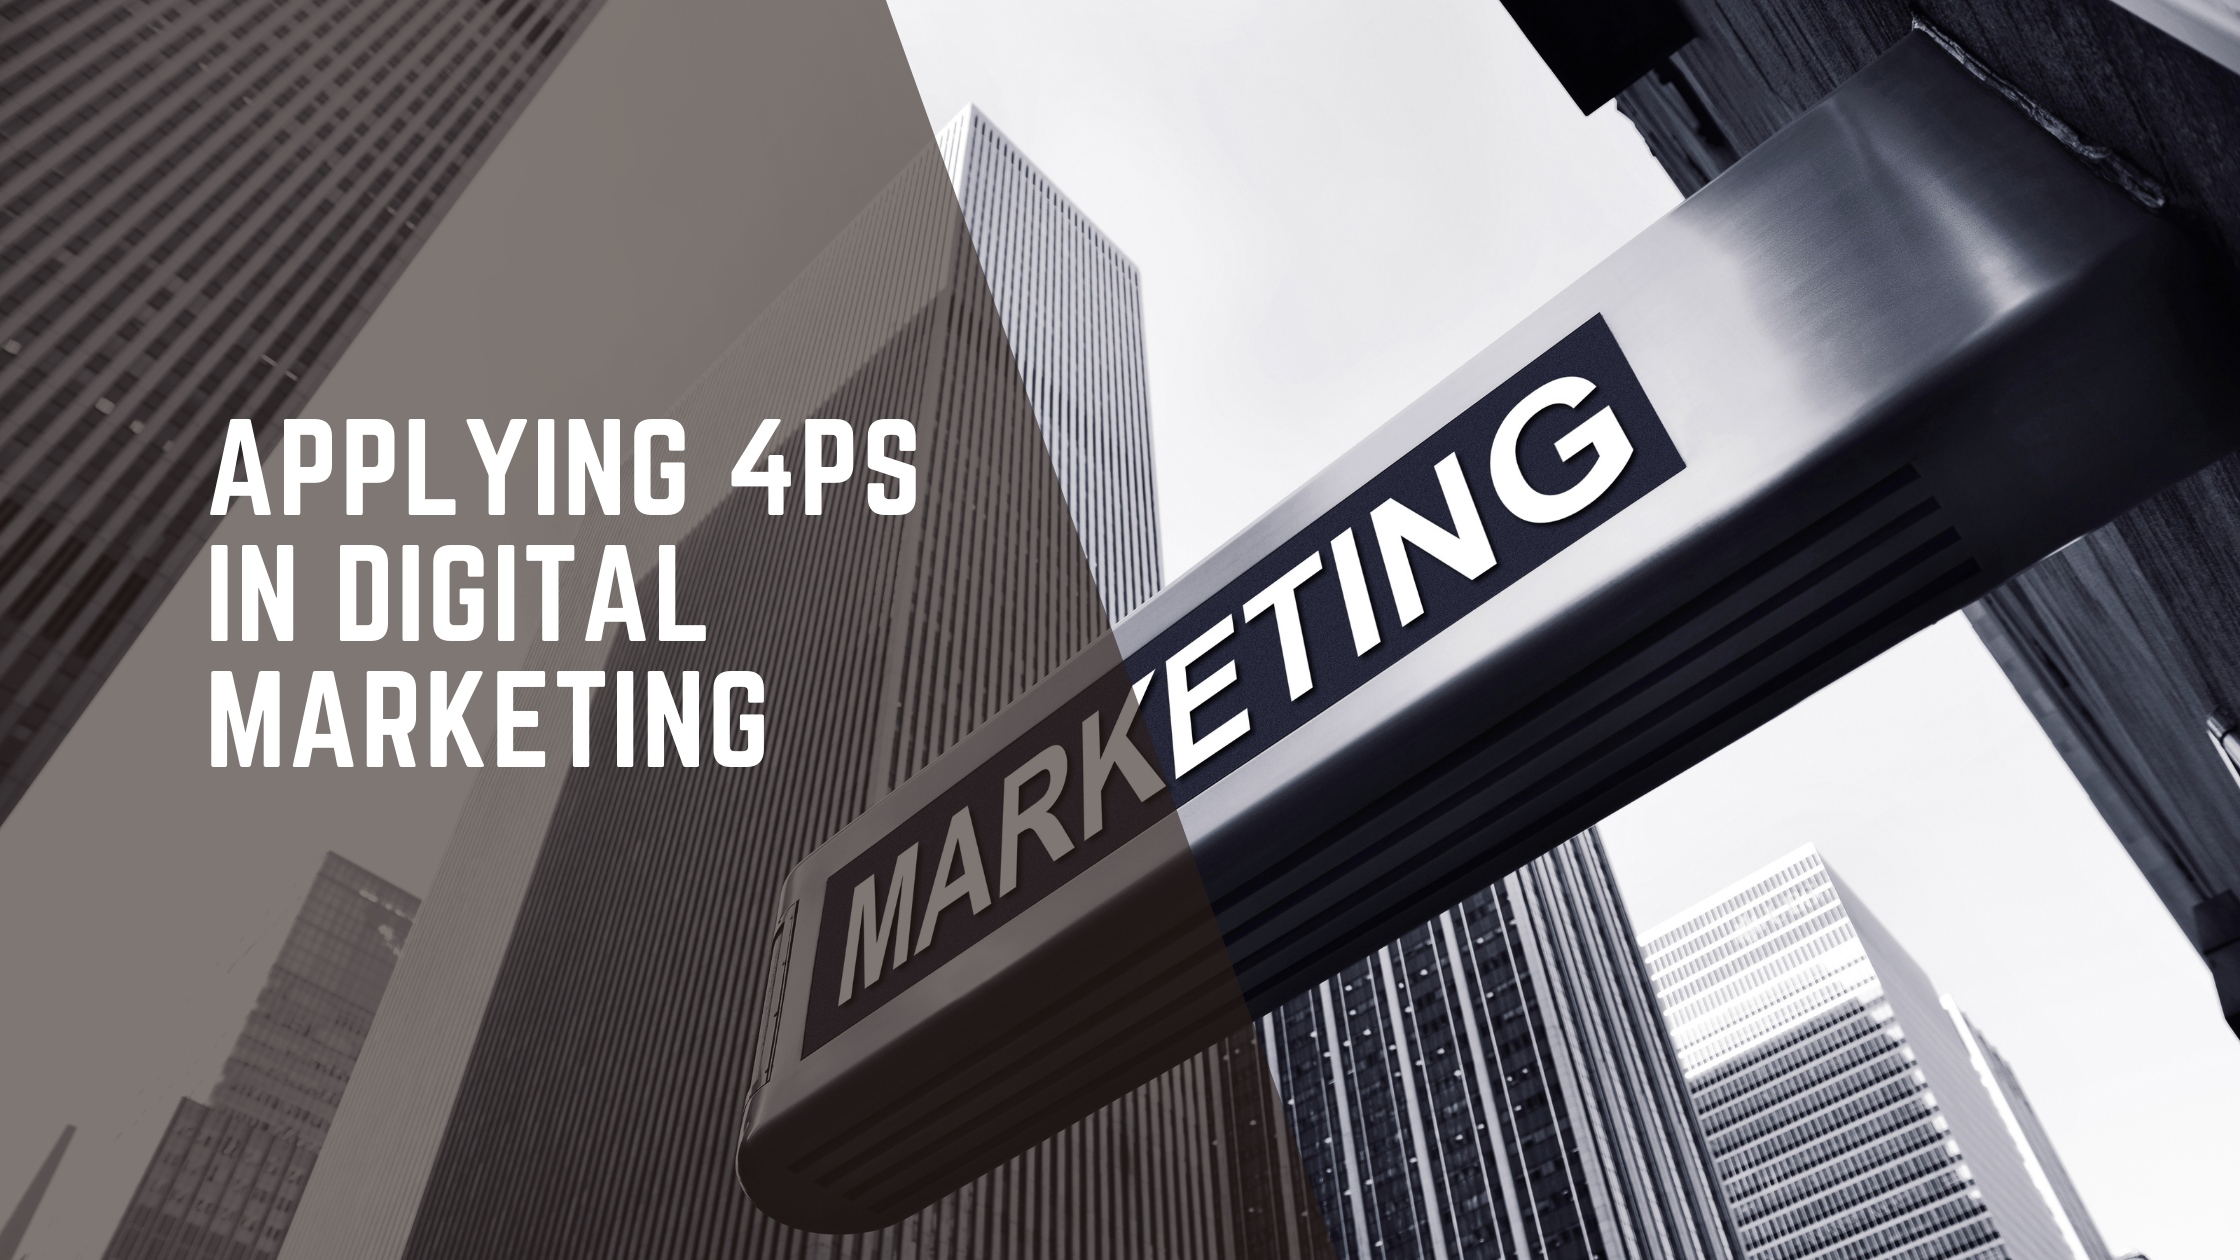 4Ps of Digital Marketing